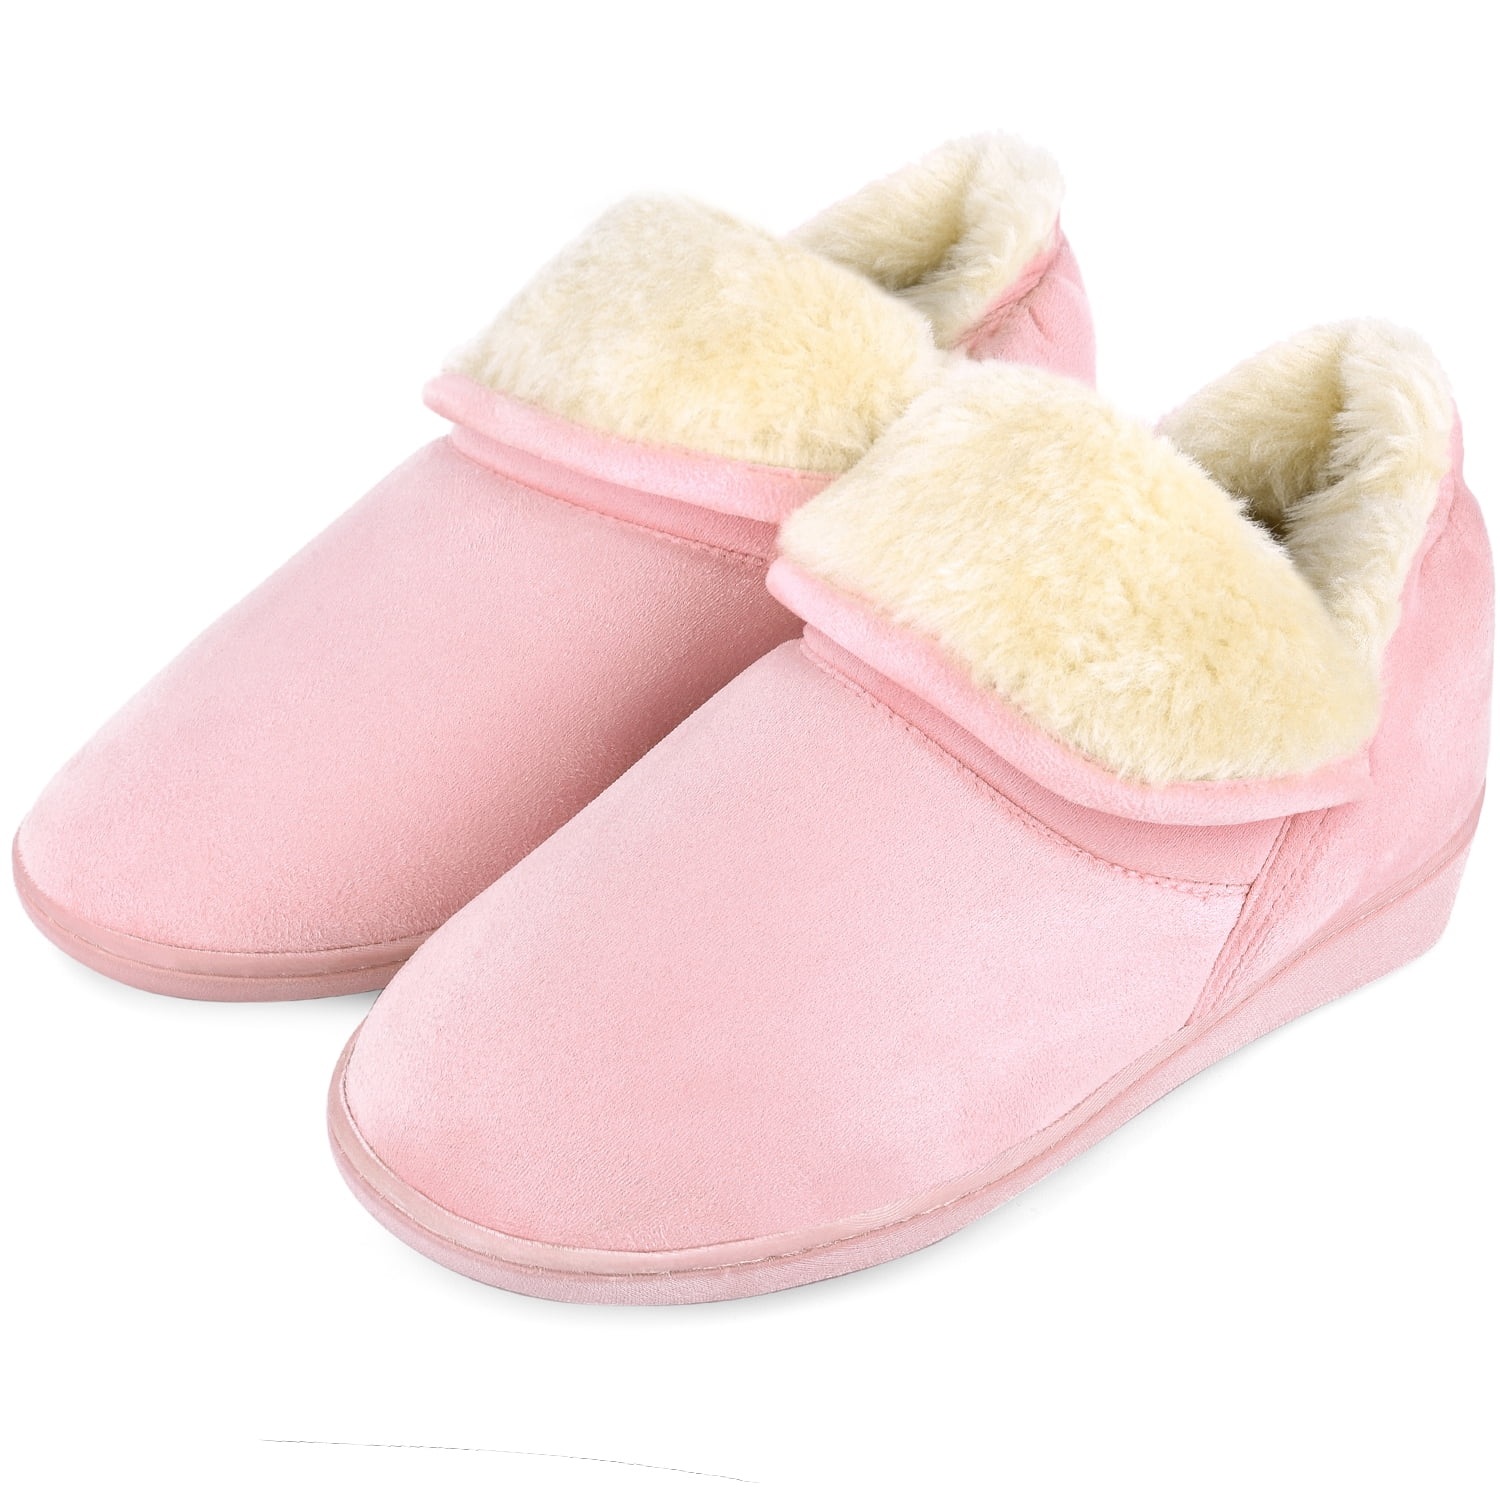 warm slipper booties